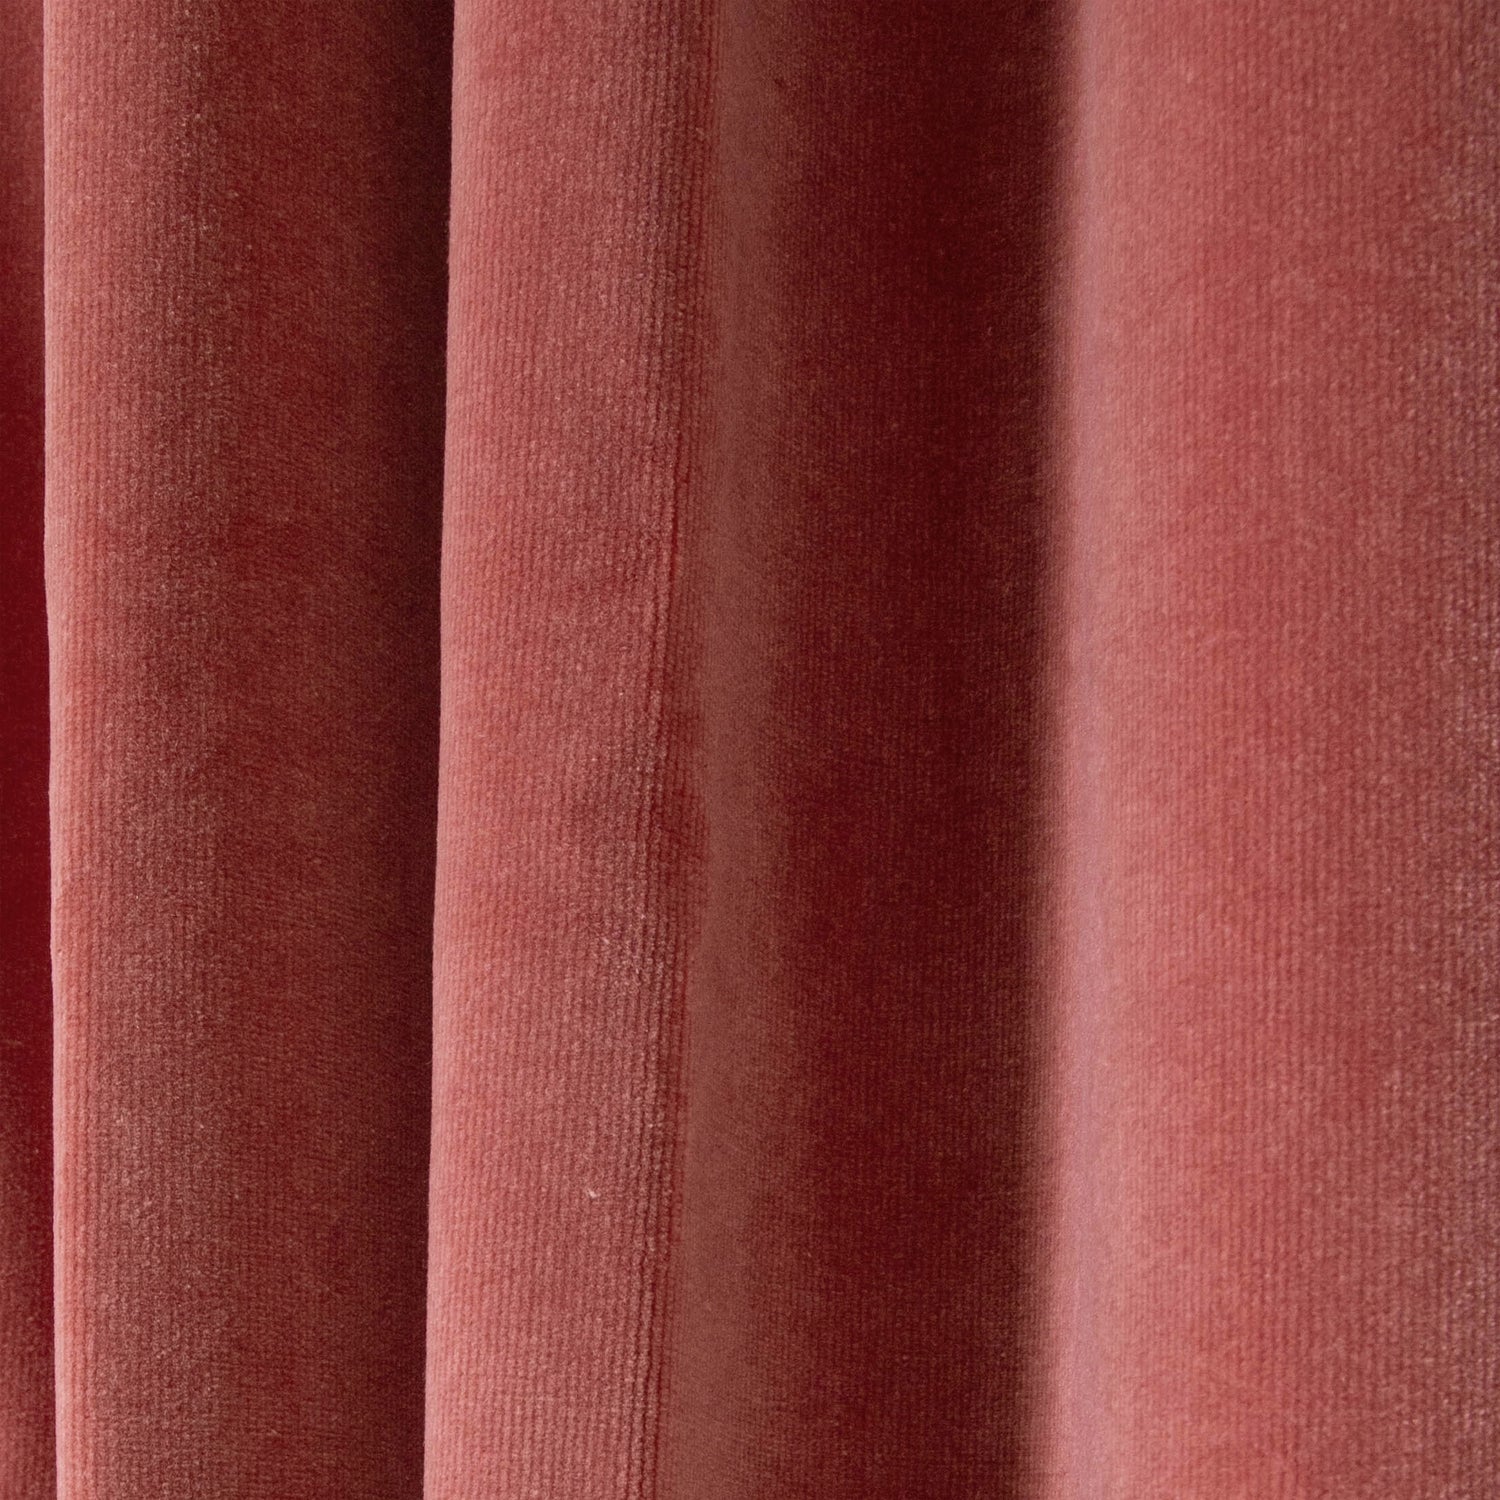 Coral Velvet Curtain Close-Up